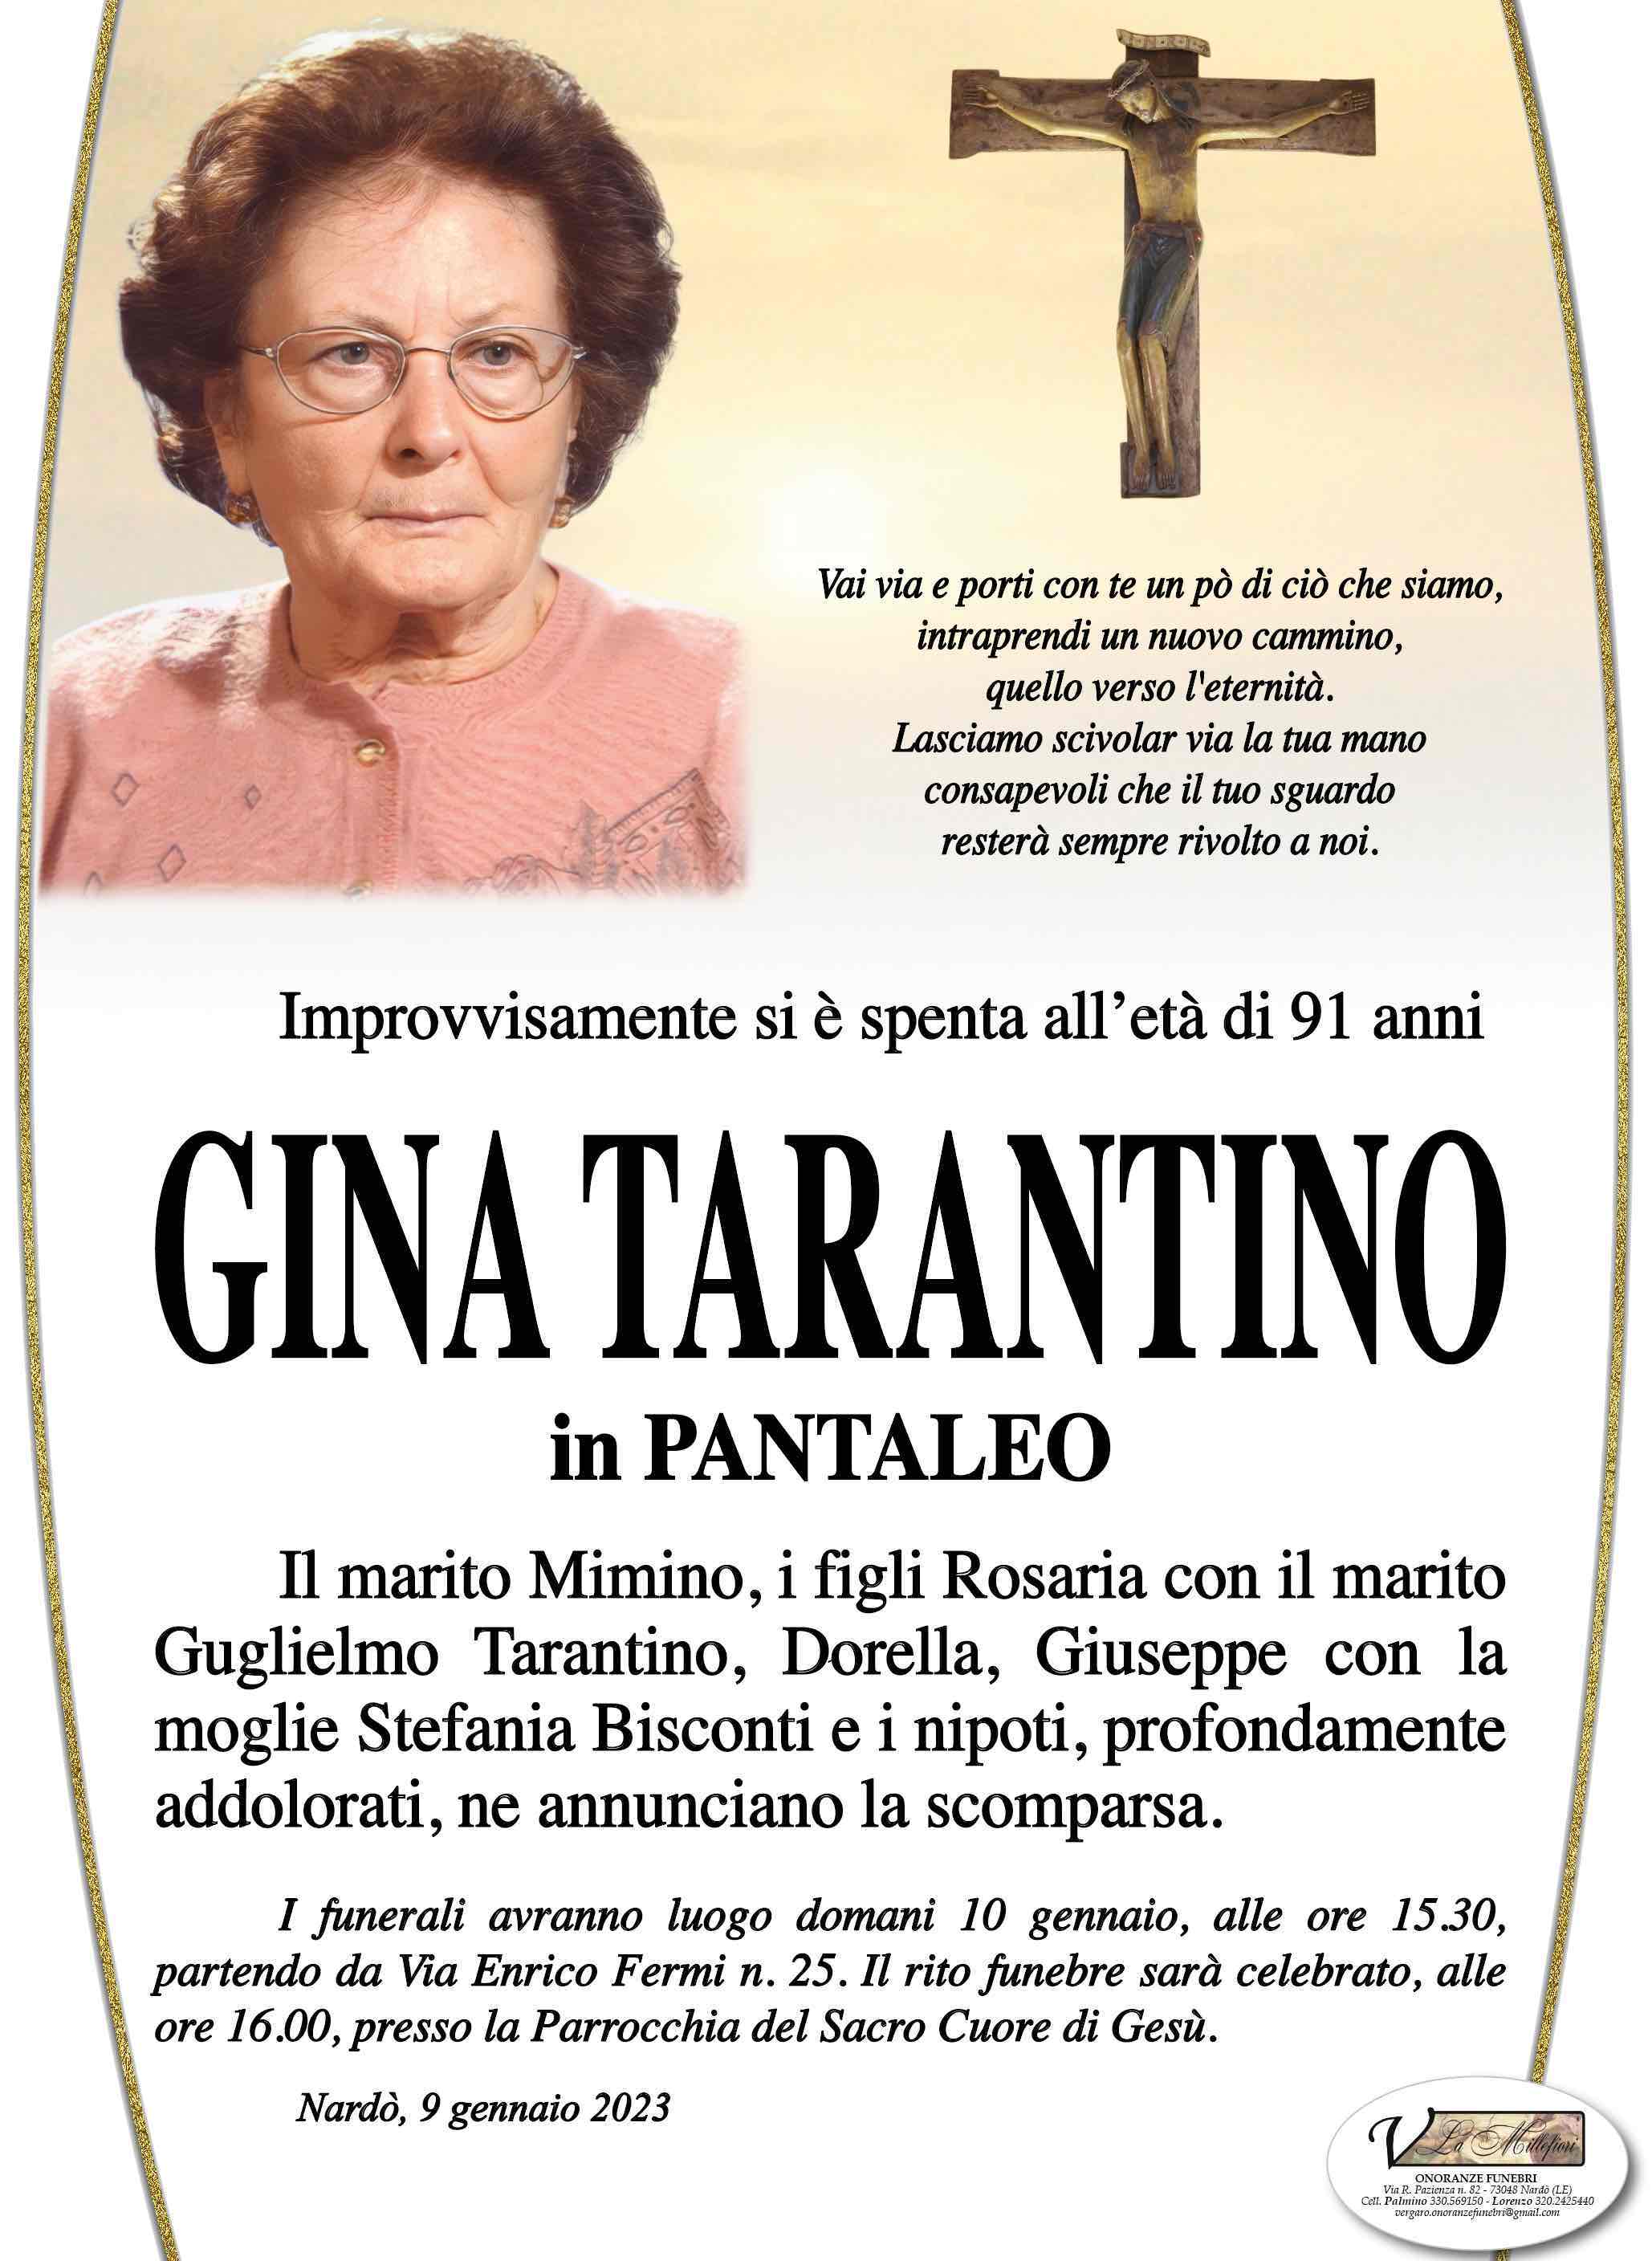 Gina Tarantino